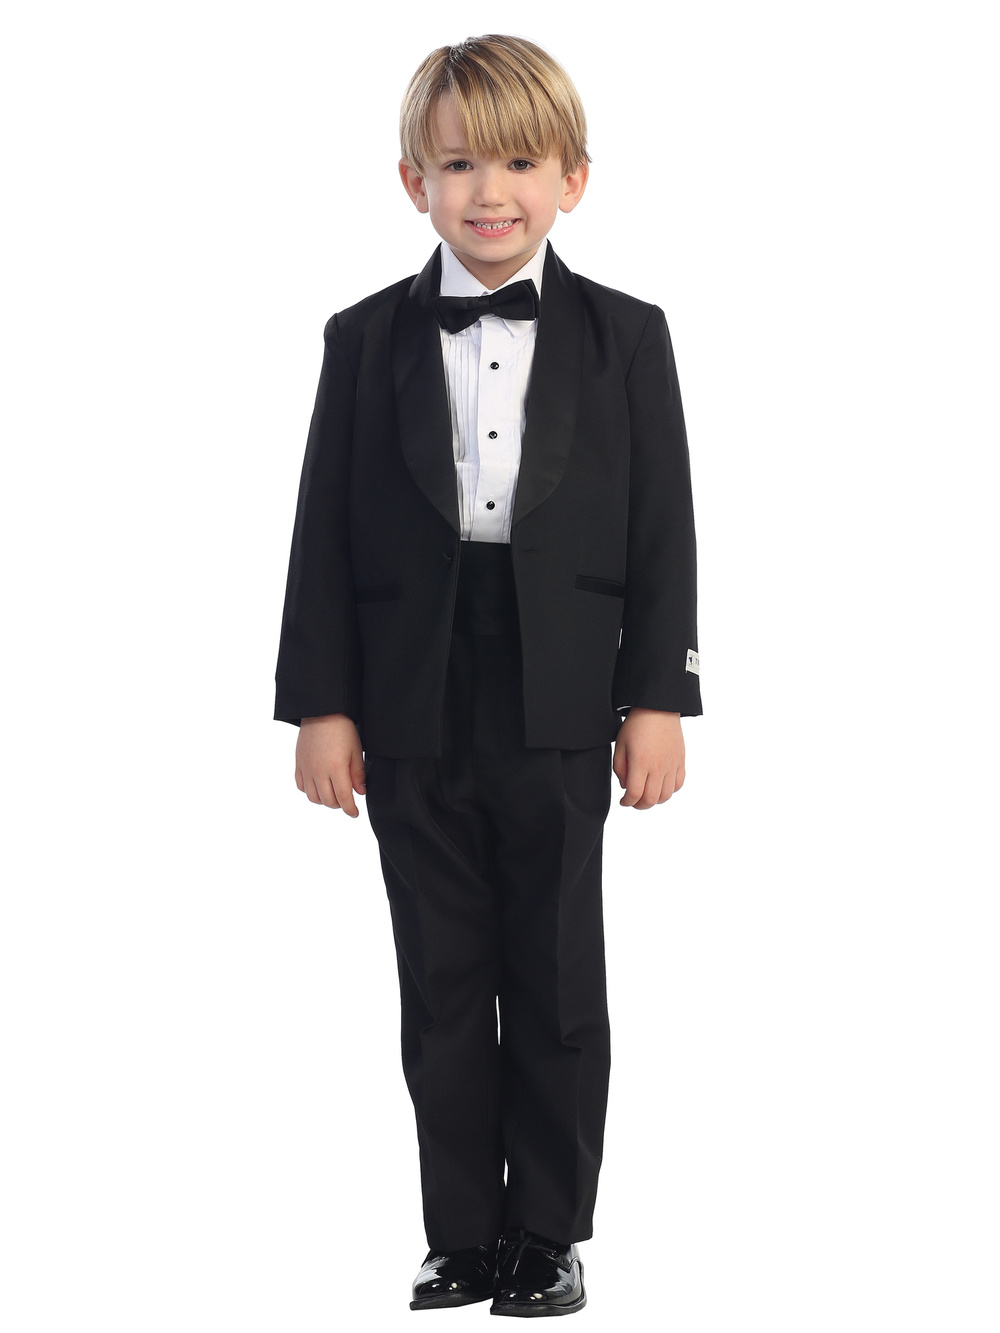 Boys Tuxedo Slim Fit Shawl Collar 7 Piece Formal Suit Set Size 12 Months 18 